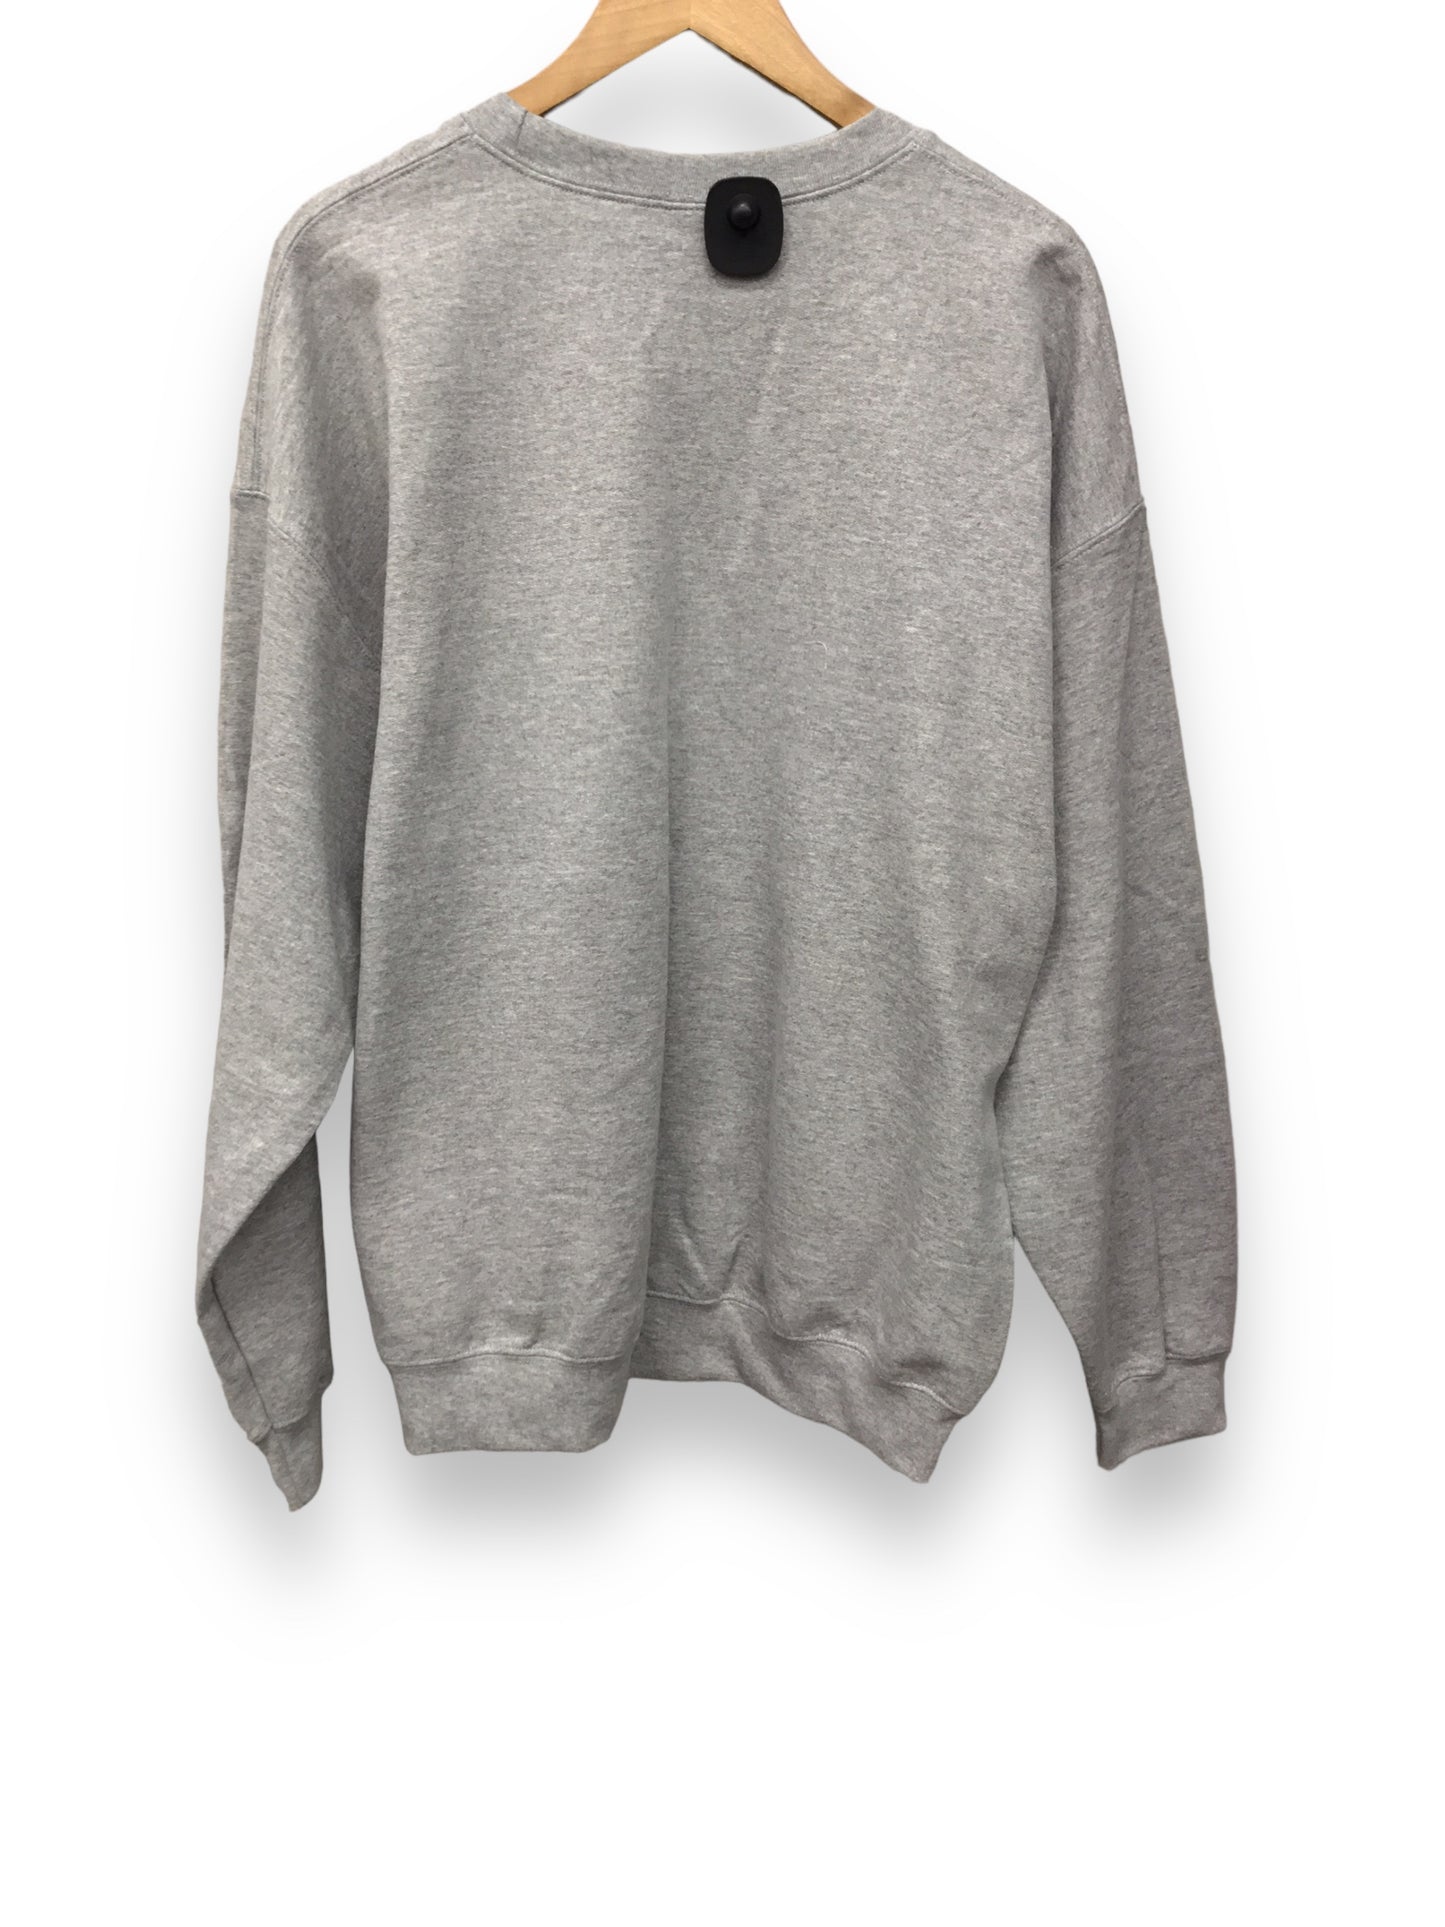 Sweatshirt Crewneck By Gildan  Size: Xl